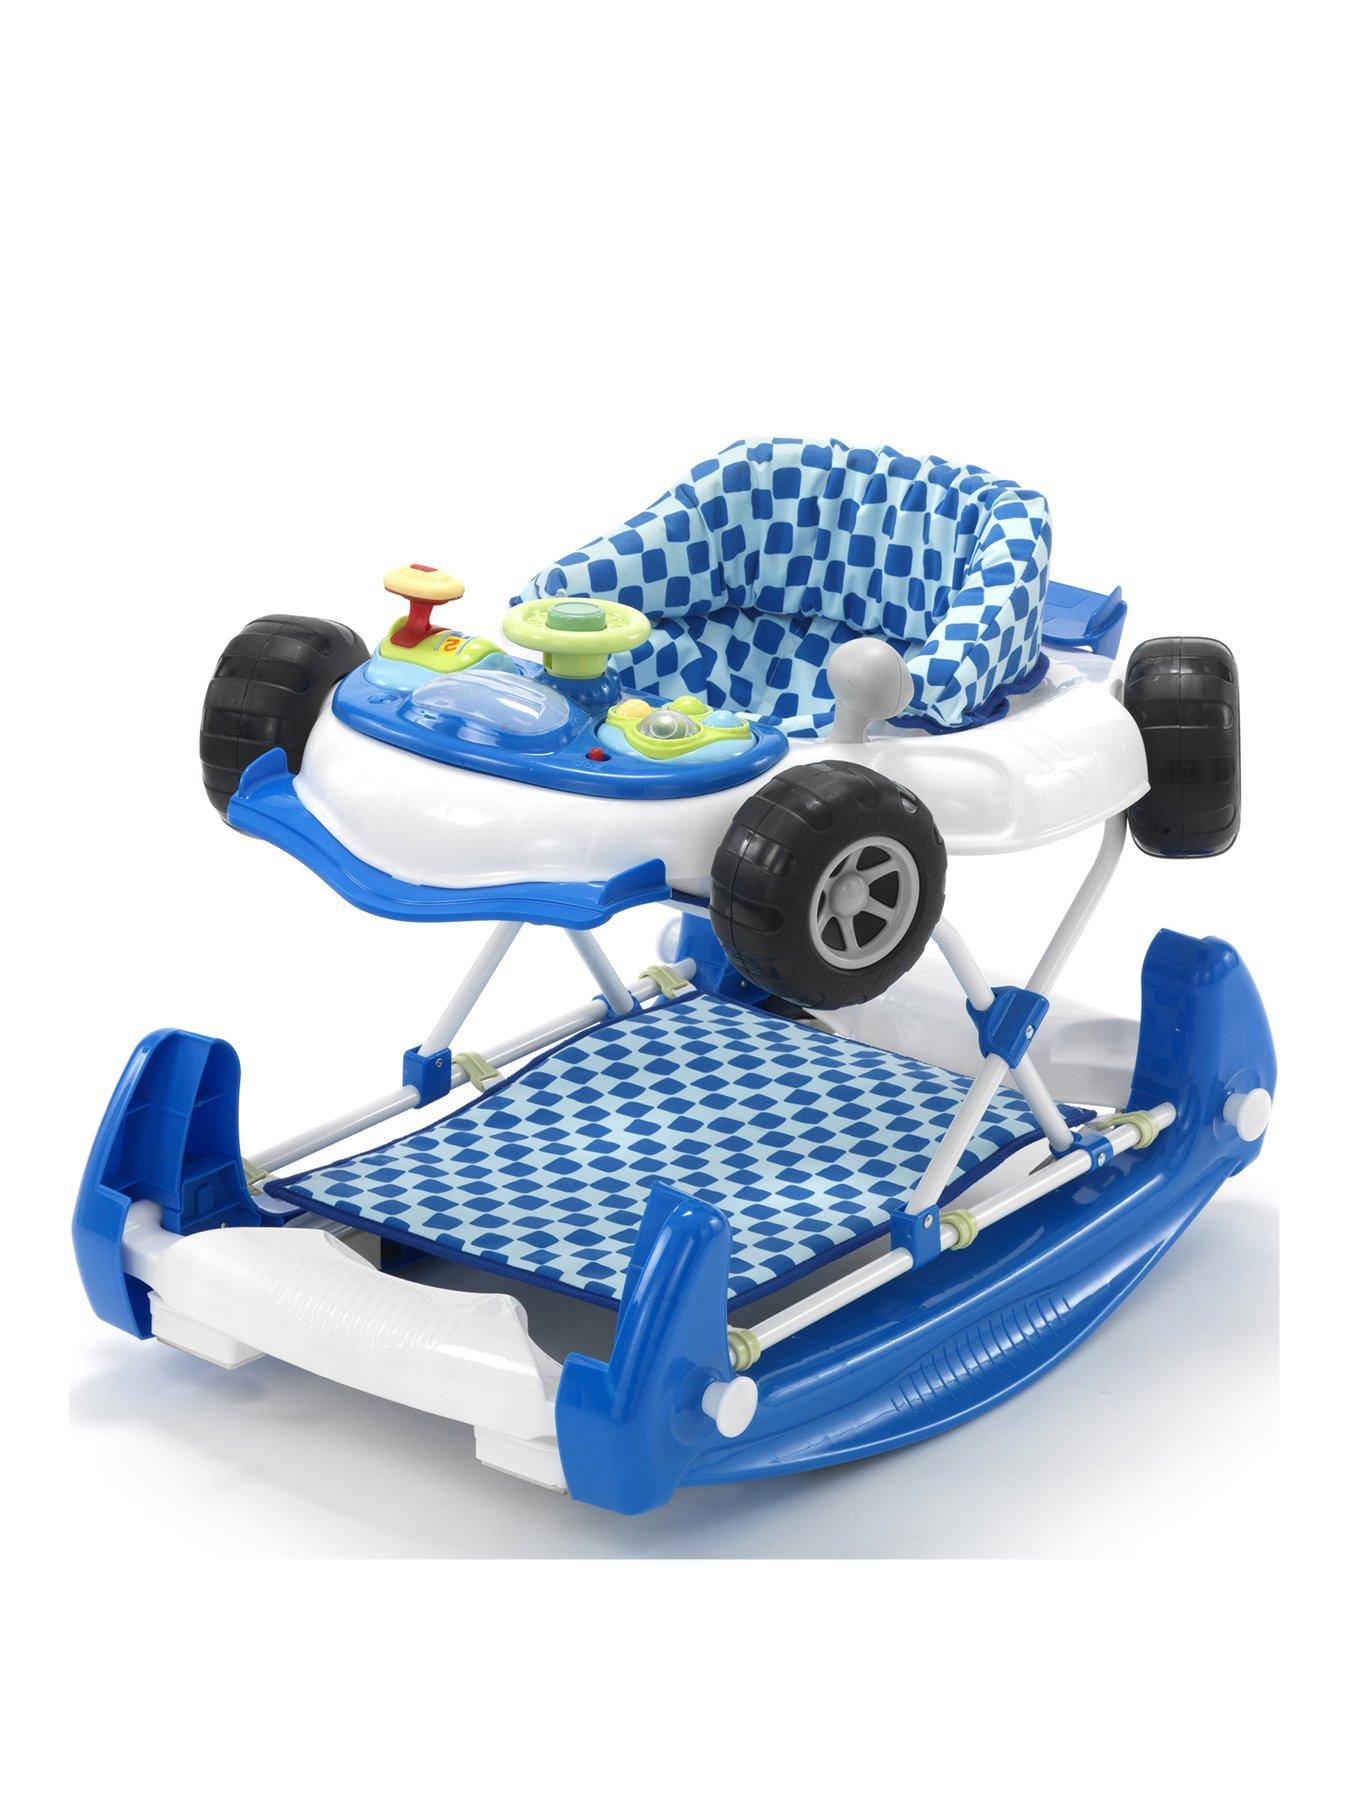 car walker for baby